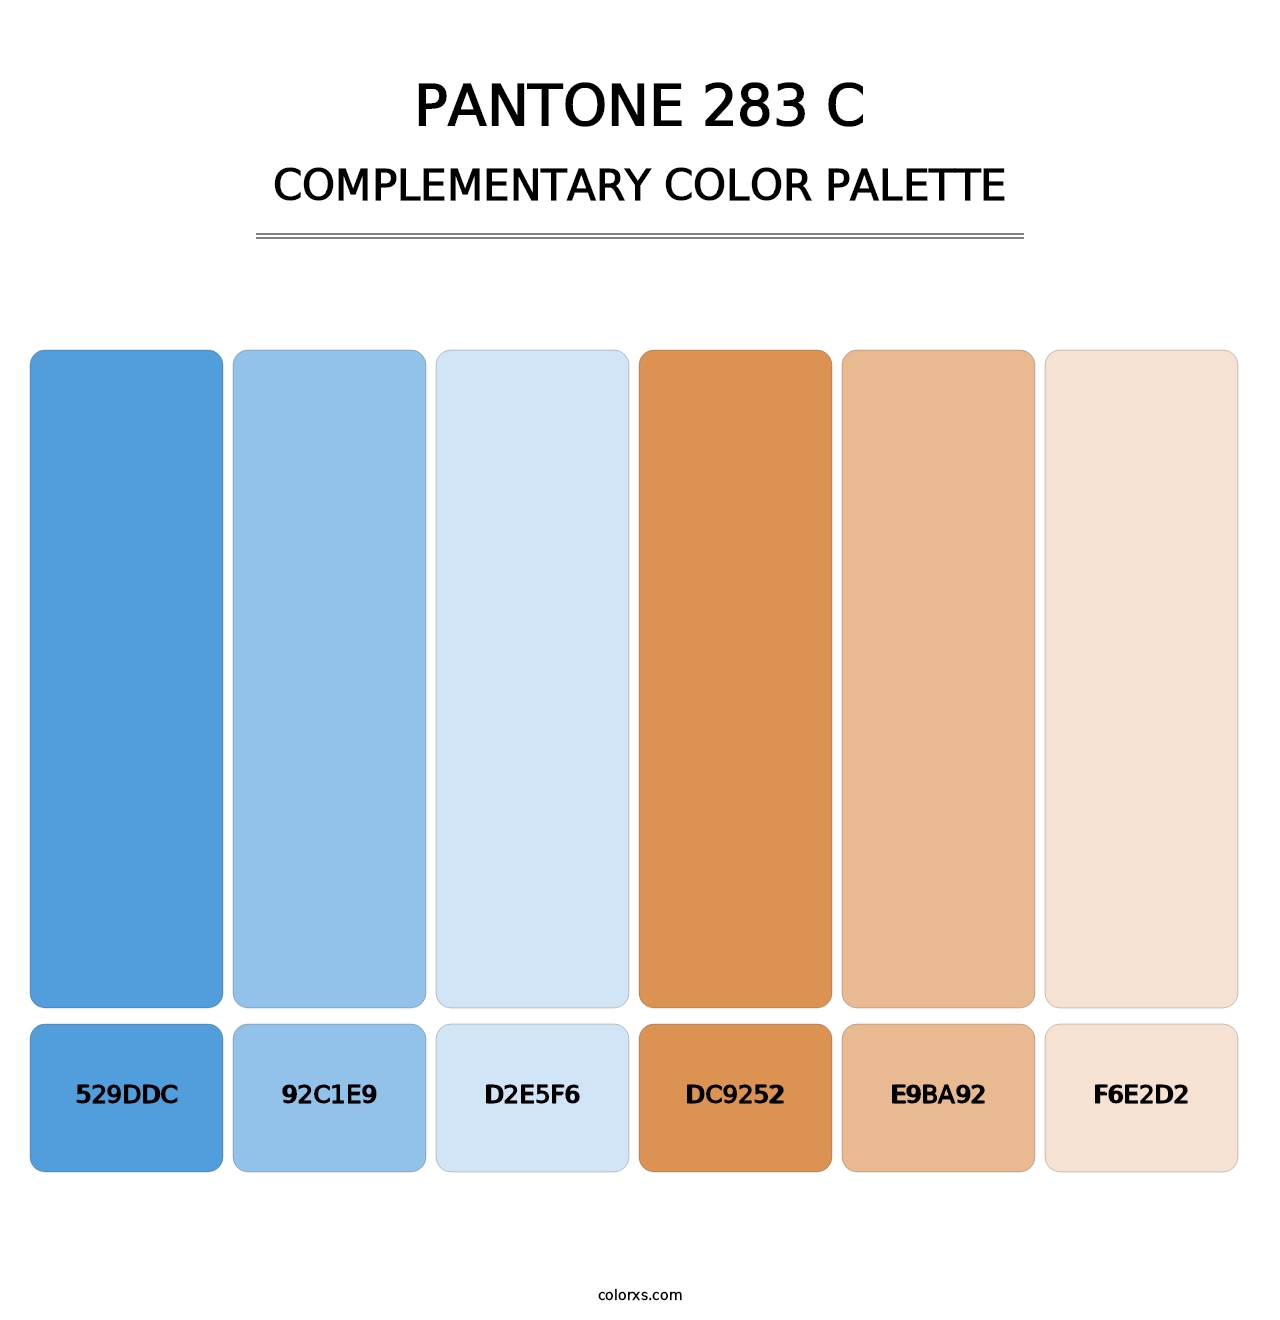 PANTONE 283 C - Complementary Color Palette